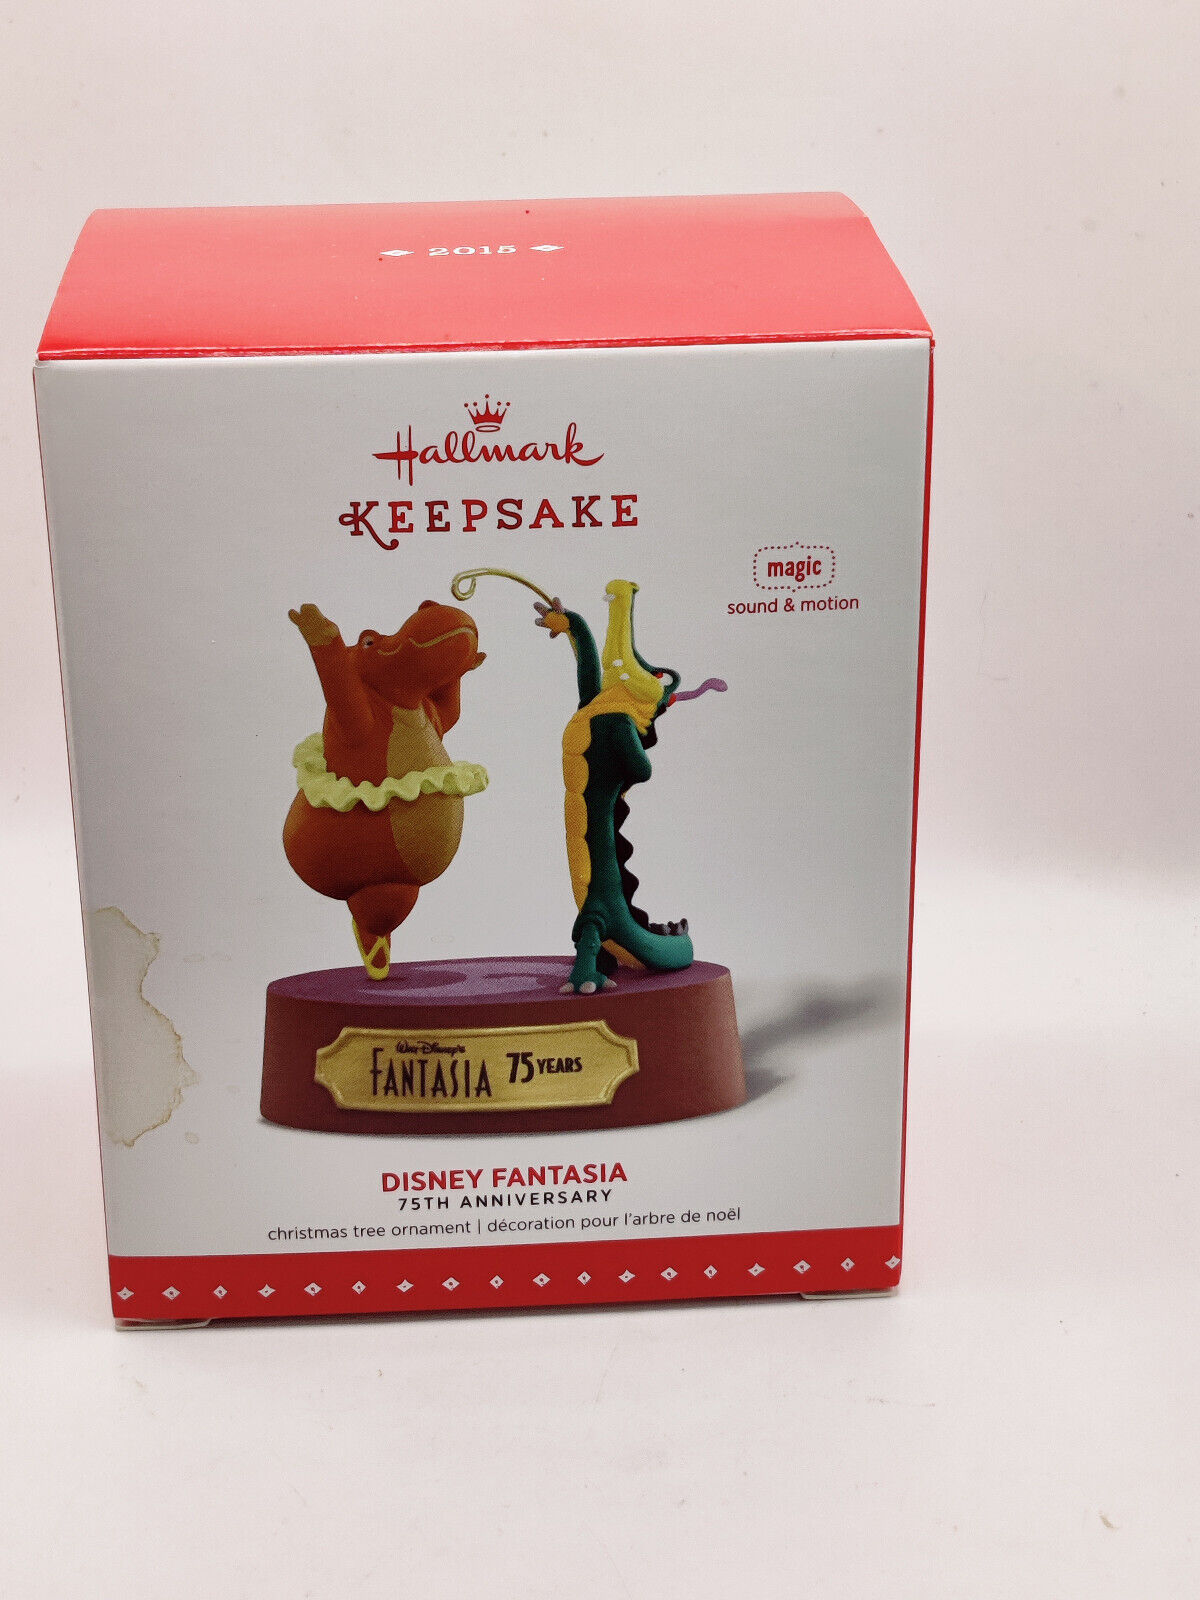 2015 Hallmark keepsake Ornament Disney Fantasia 75th Anniversary in Box